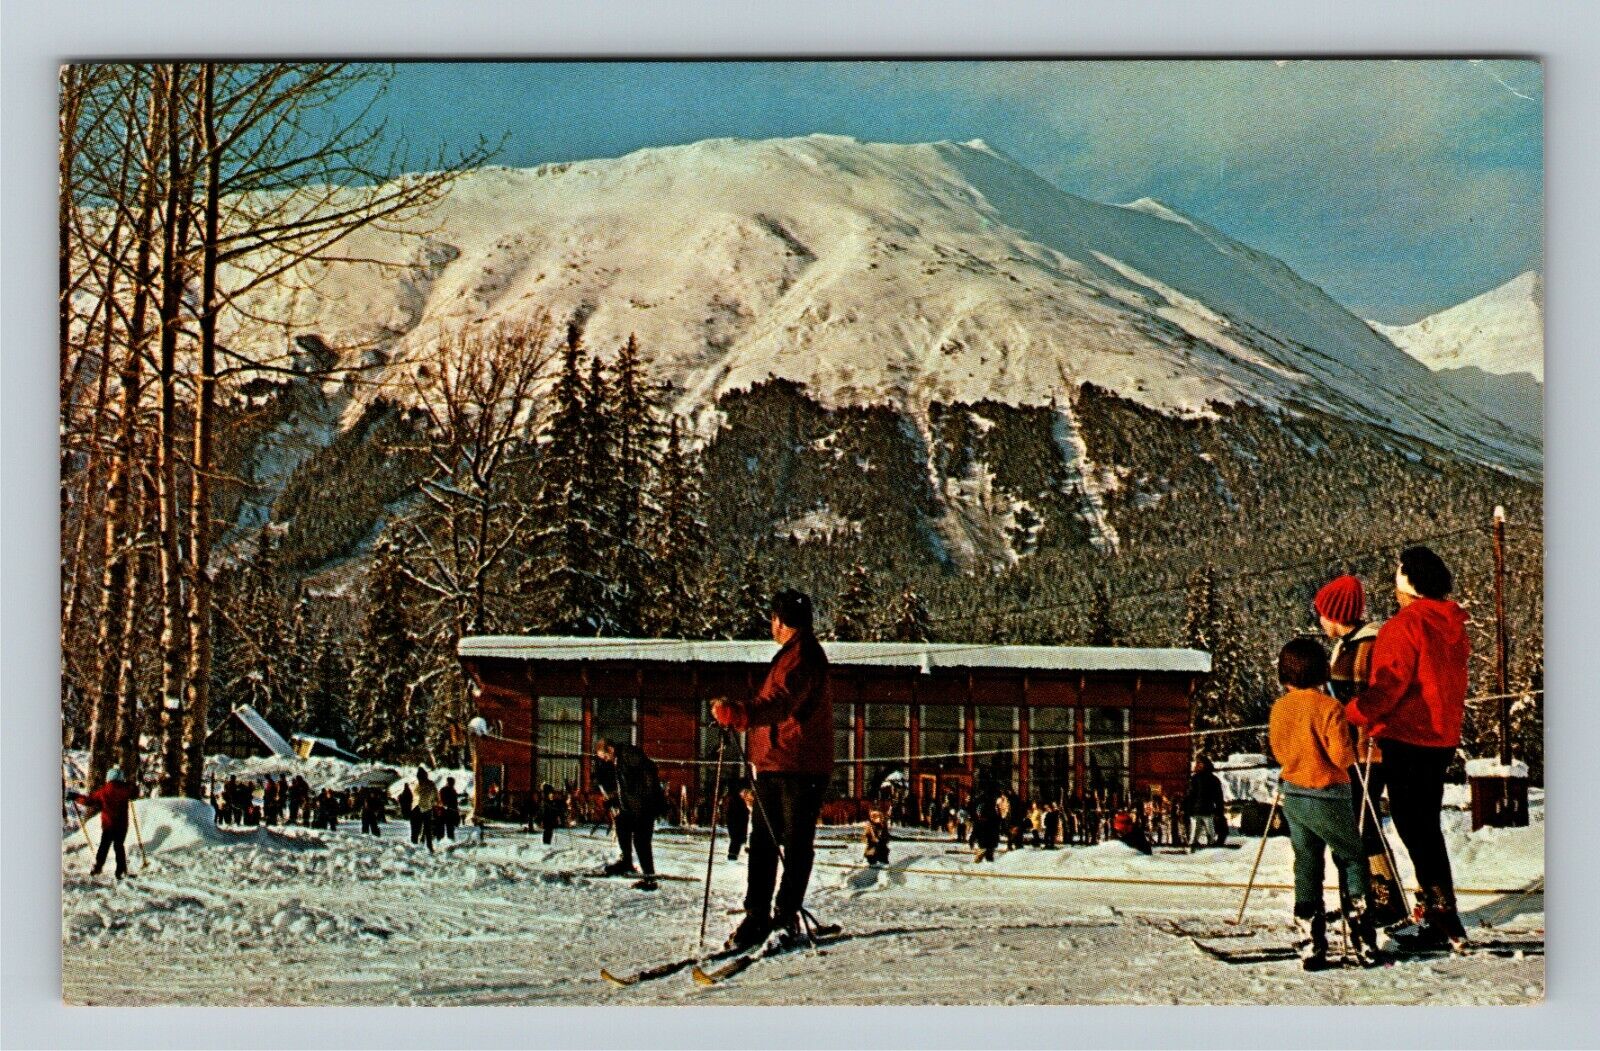 Mt. Alyeska, AK-Alaska, Novice Ski Slopes, Mountain View Vintage Postcard